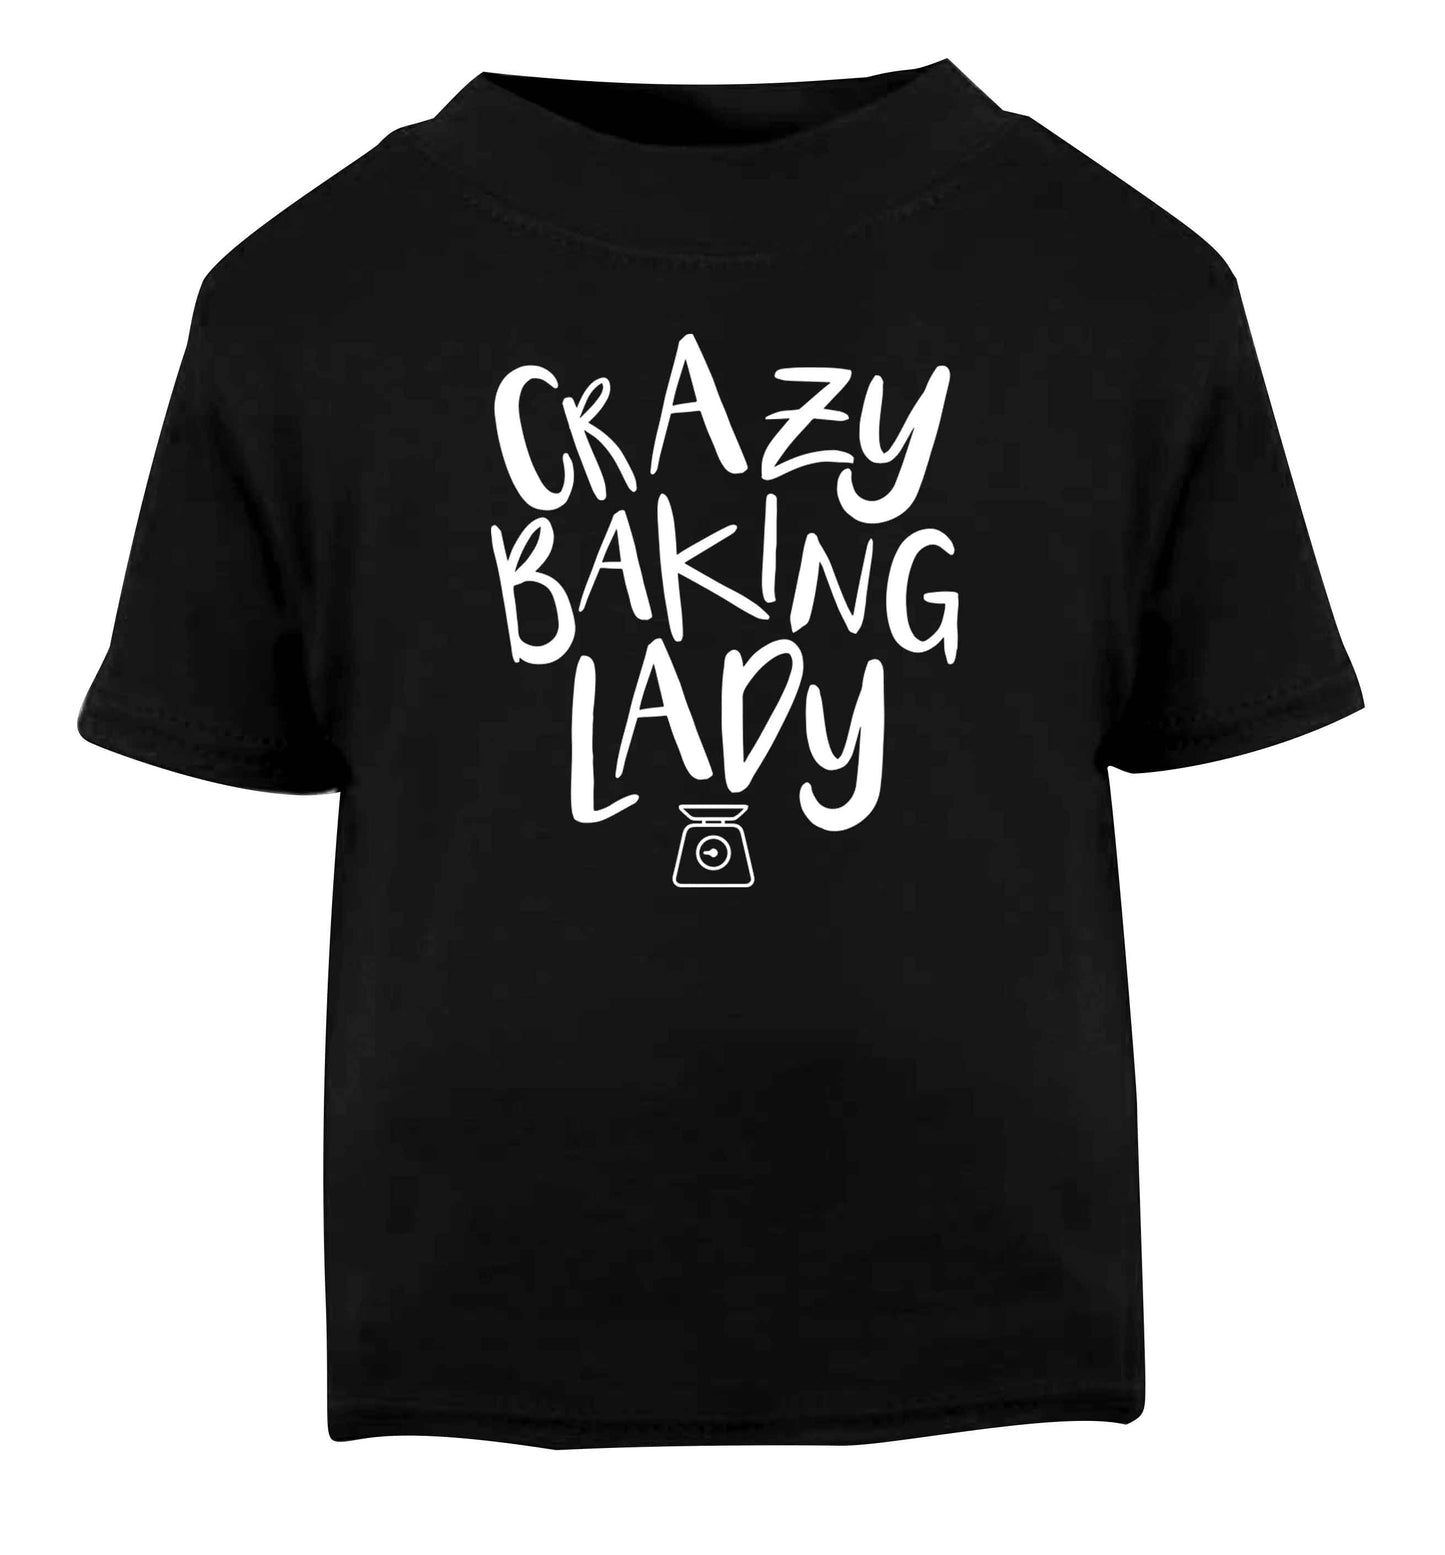 Crazy baking lady Black Baby Toddler Tshirt 2 years